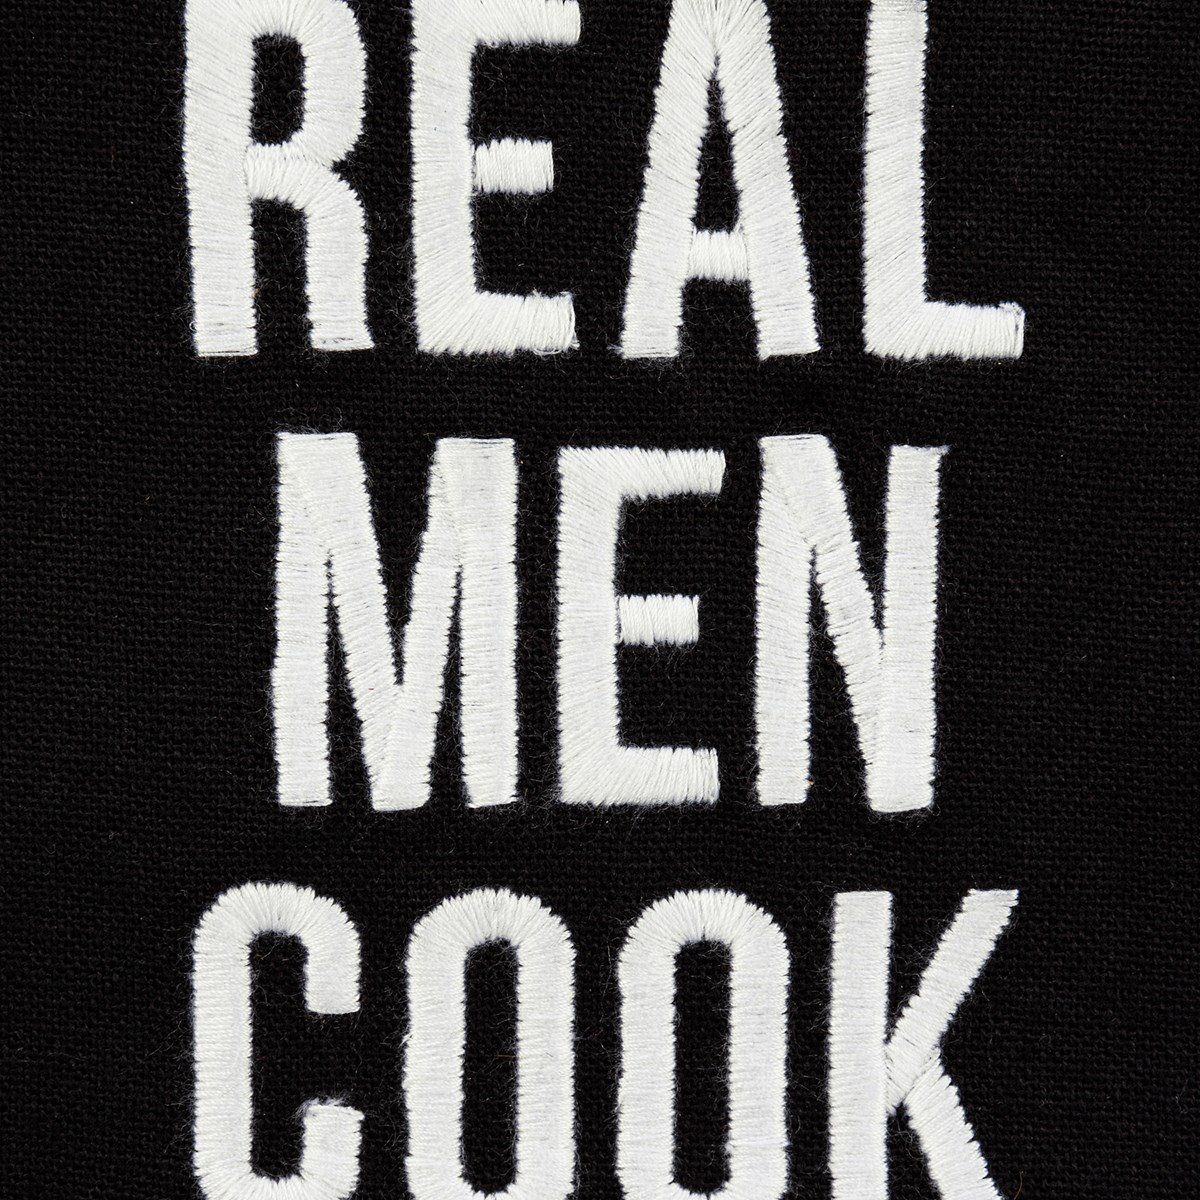 Real Men Cook Kitchen Towel - Cotton